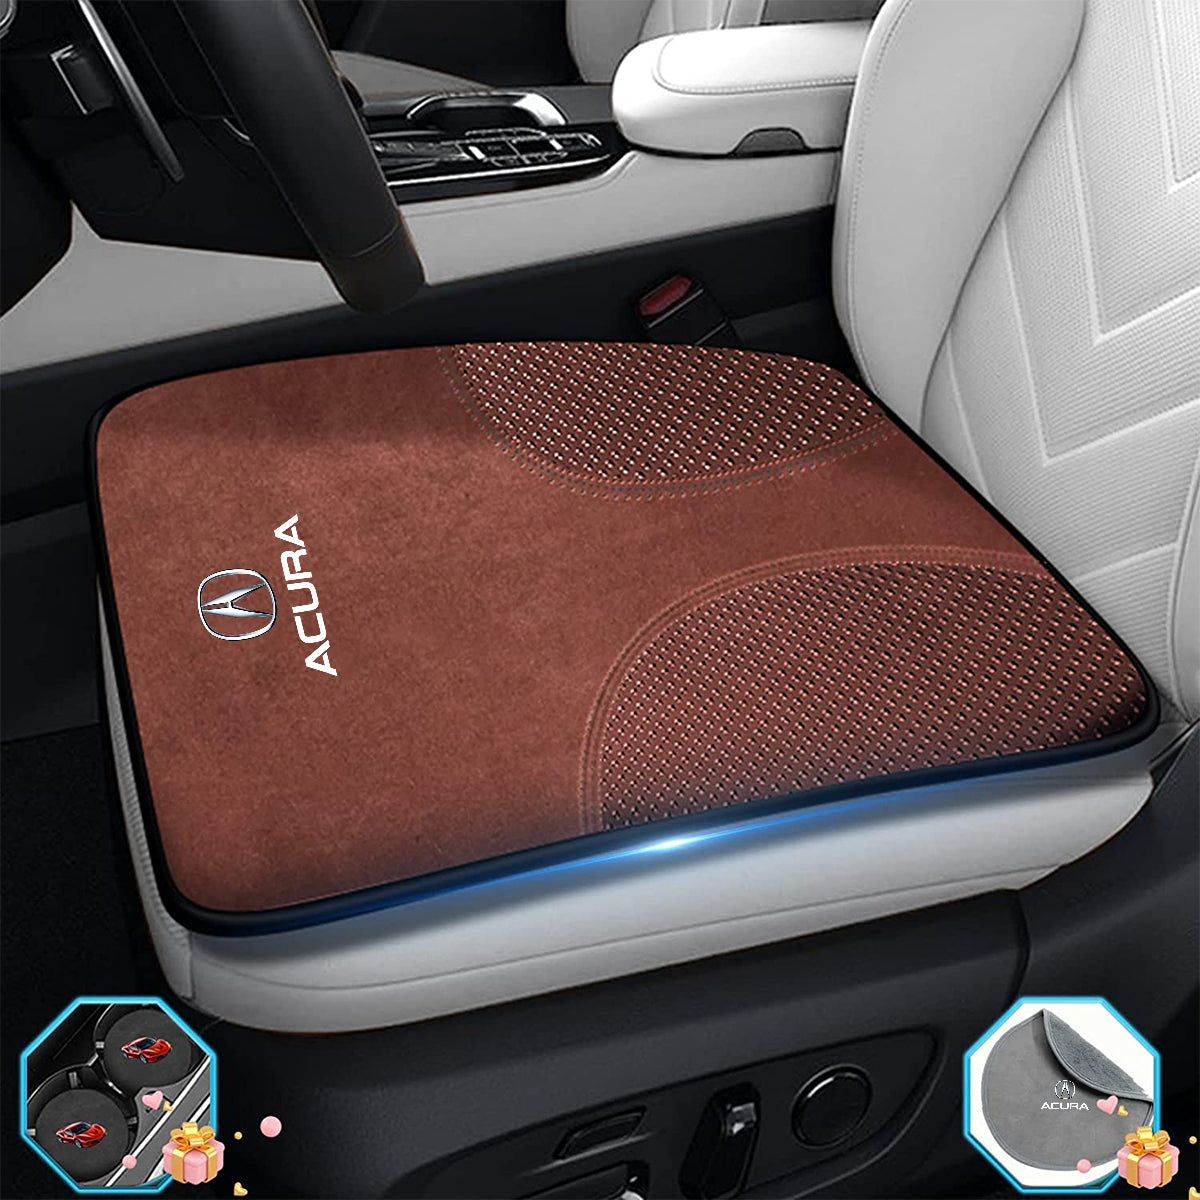  Memory Foam Car Seat Cushion, Heightening Driver Seat